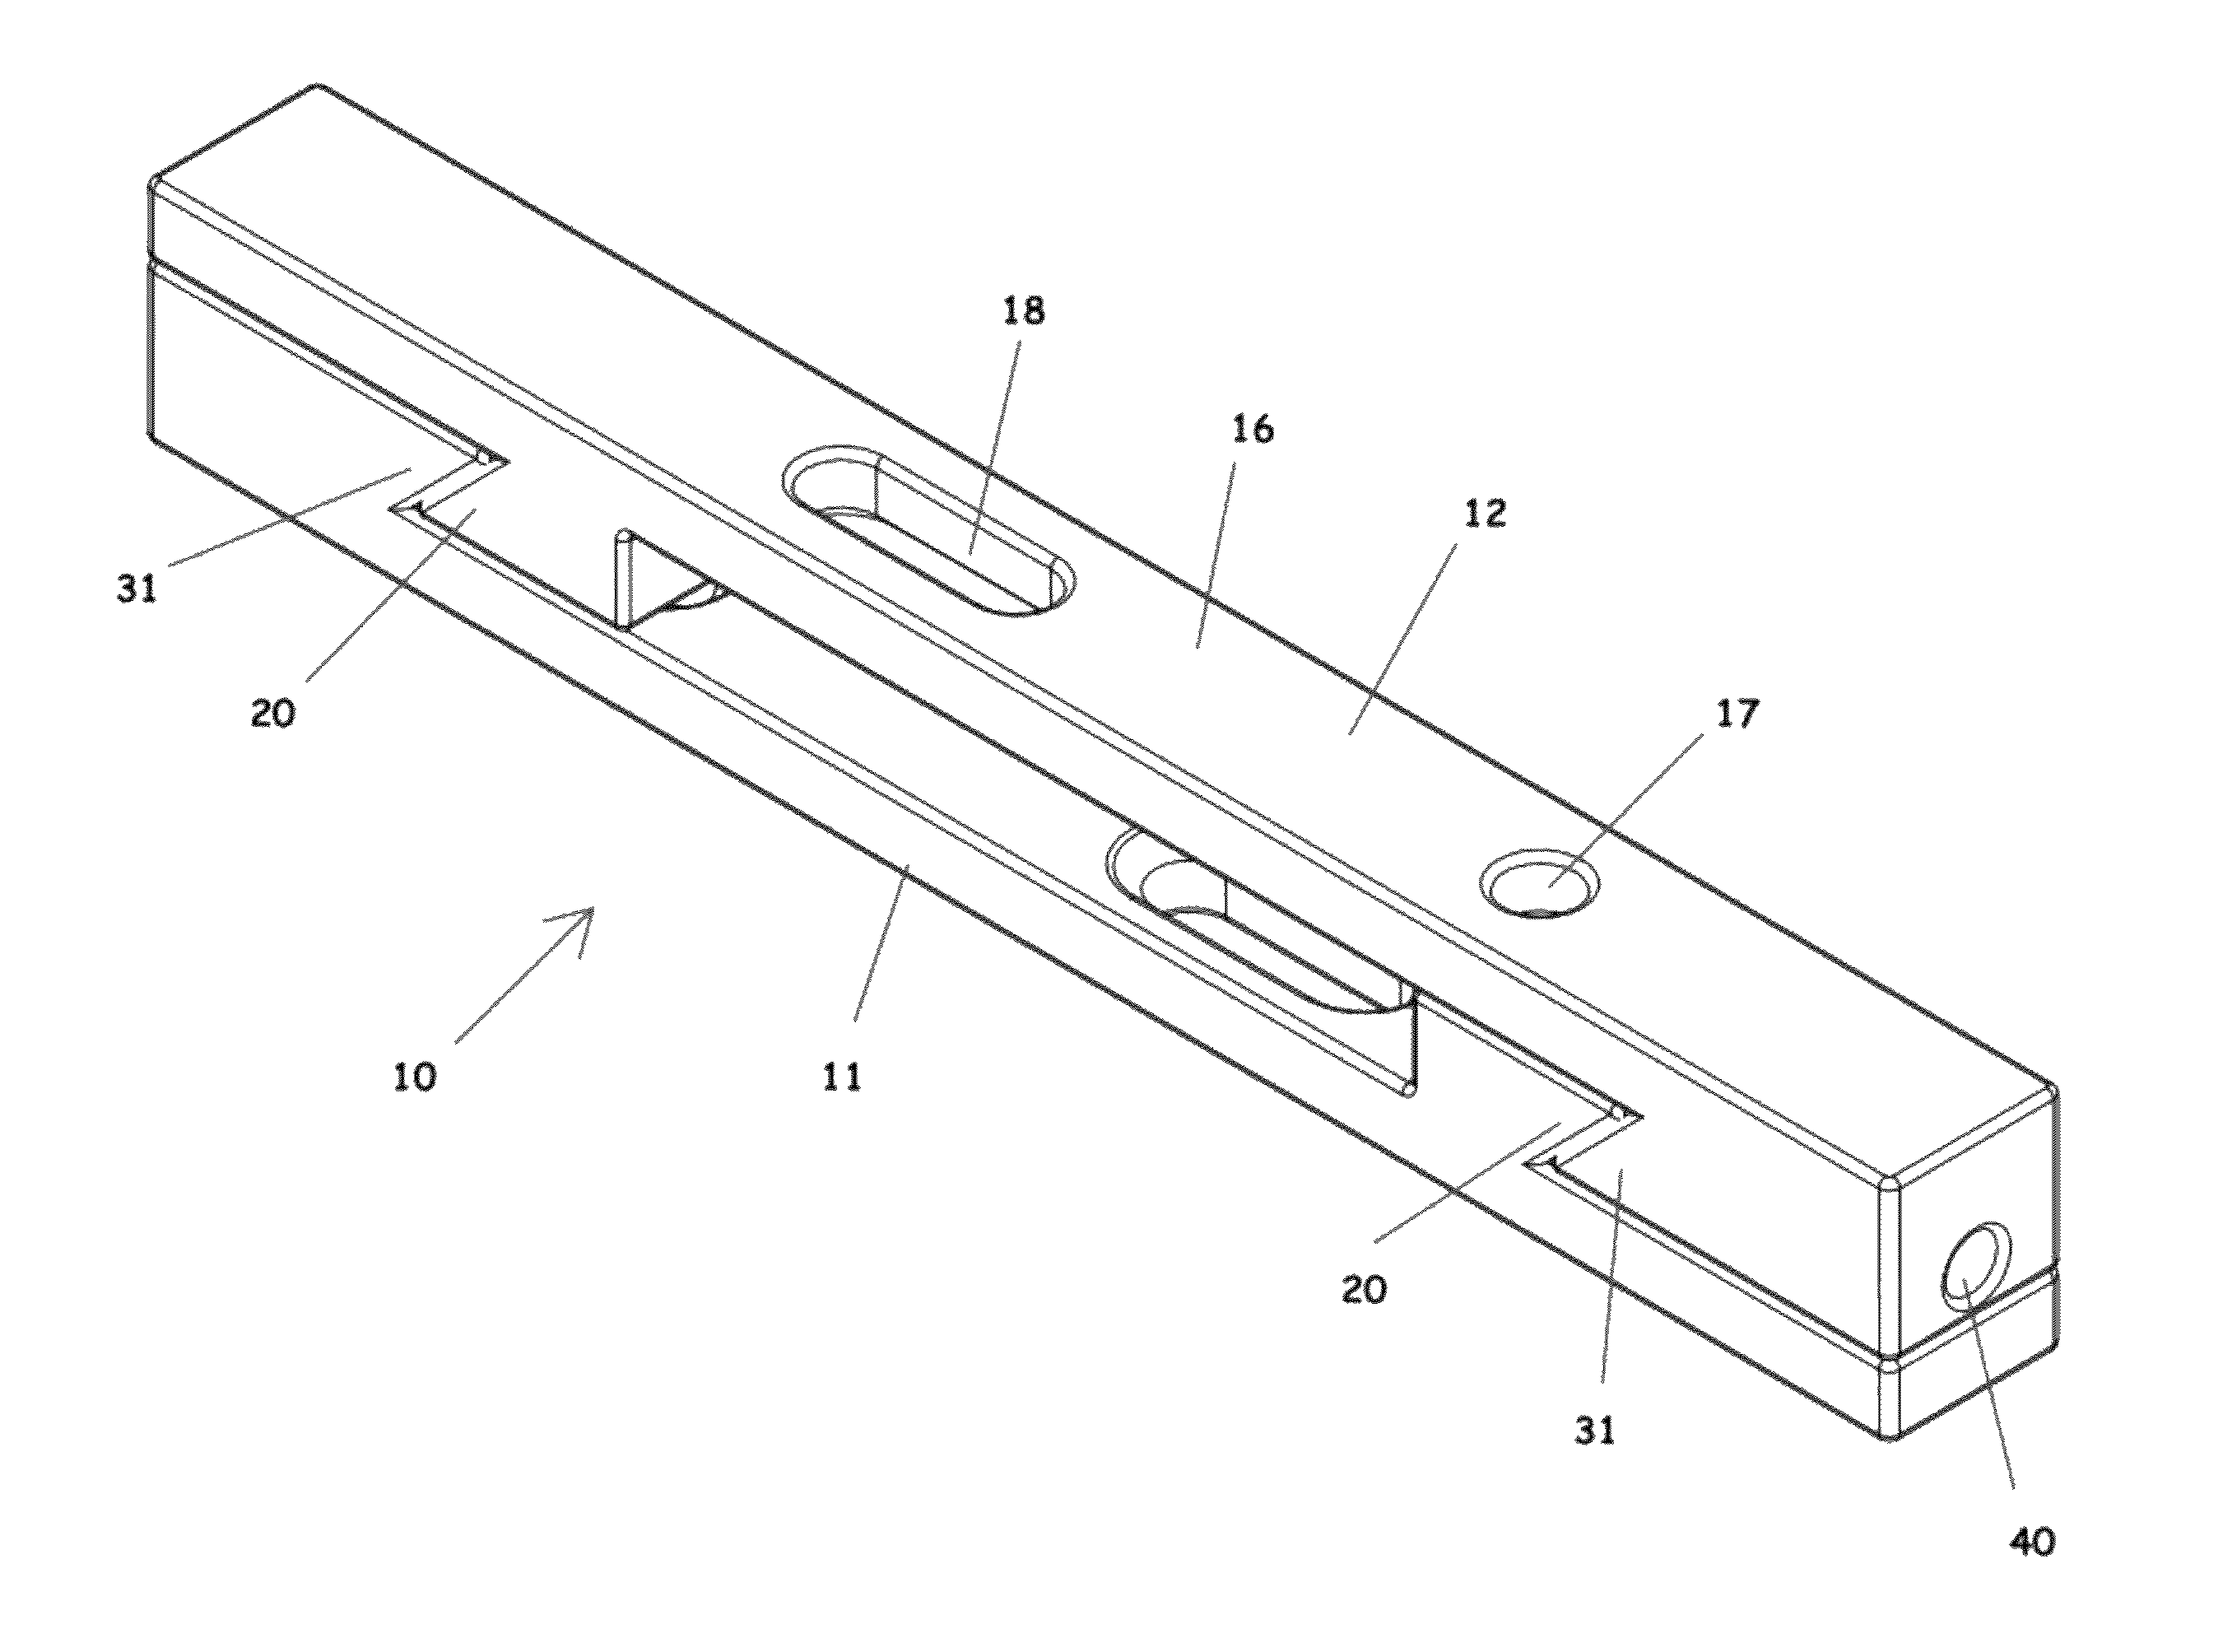 Interlocking connector system